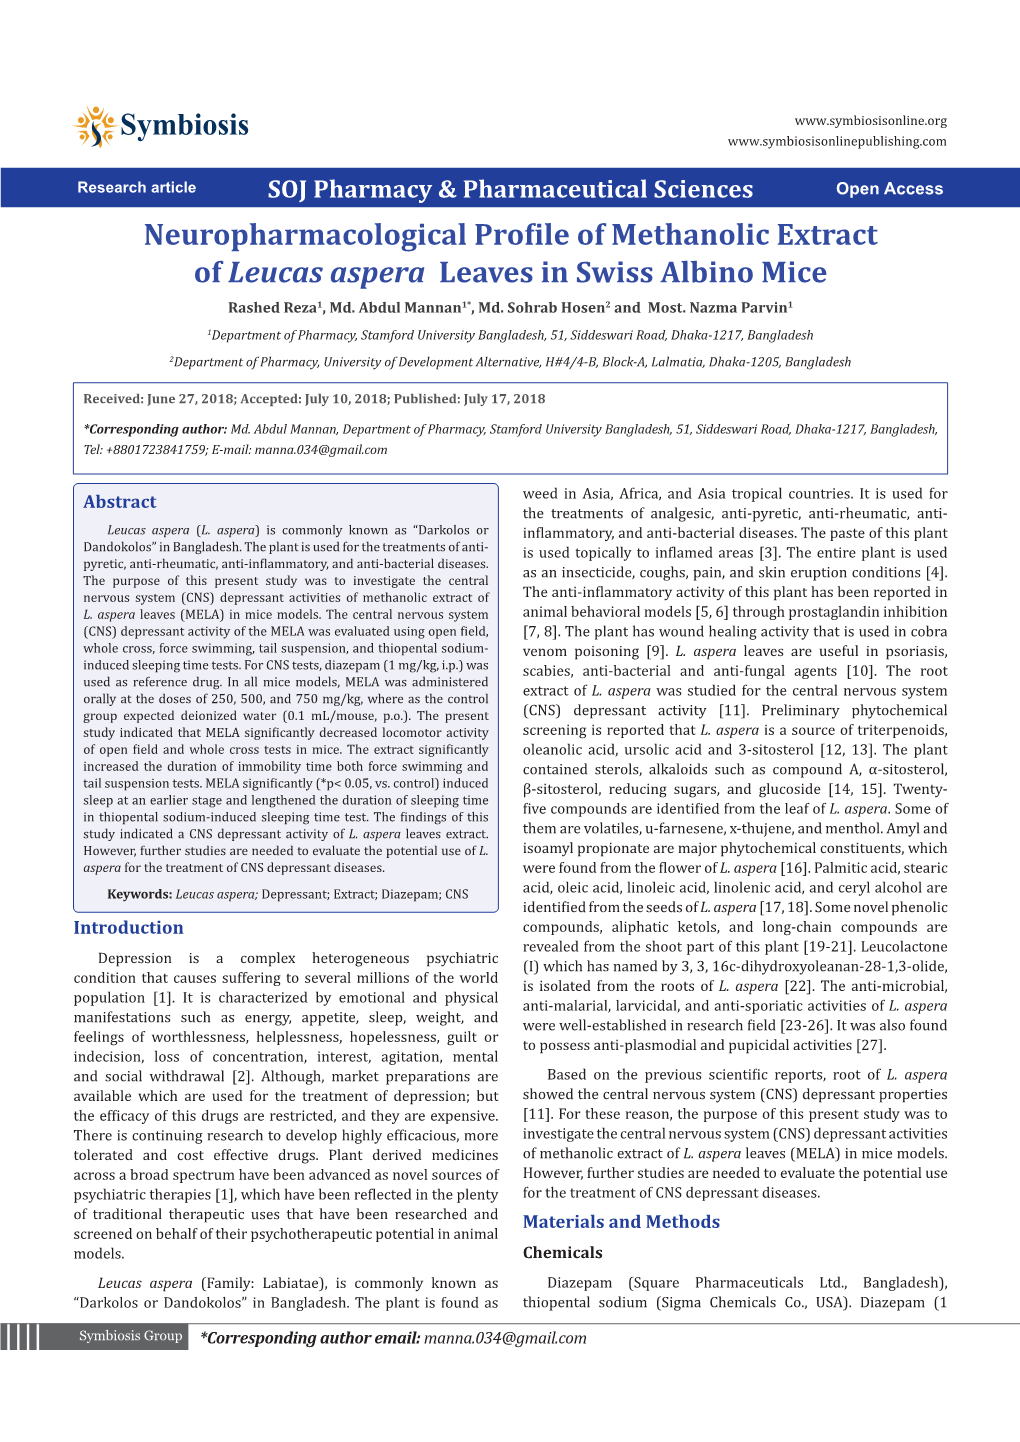 Neuropharmacological Profile of Methanolic Extract of Leucas Aspera Leaves in Swiss Albino Mice Rashed Reza1, Md